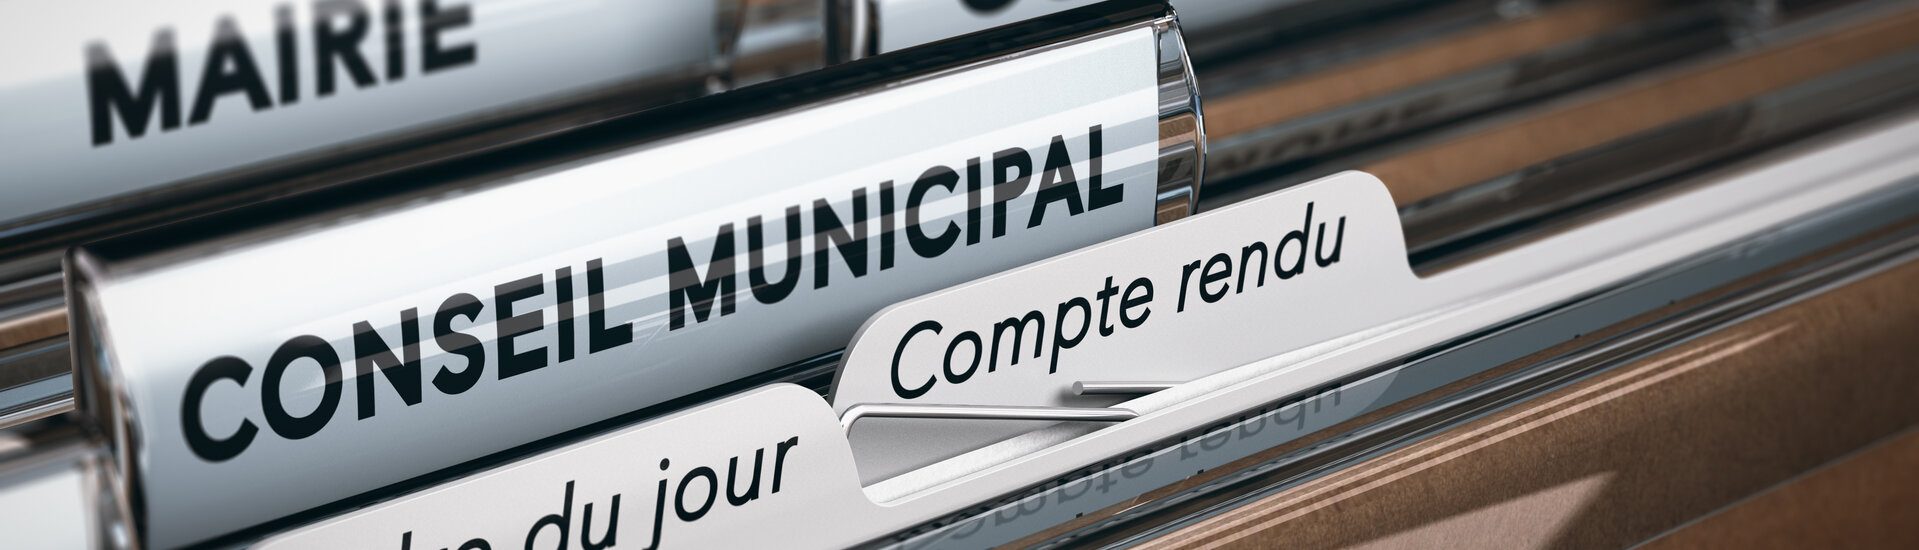 Comptes-Rendus Conseil Municipal Mairie Presly Cher